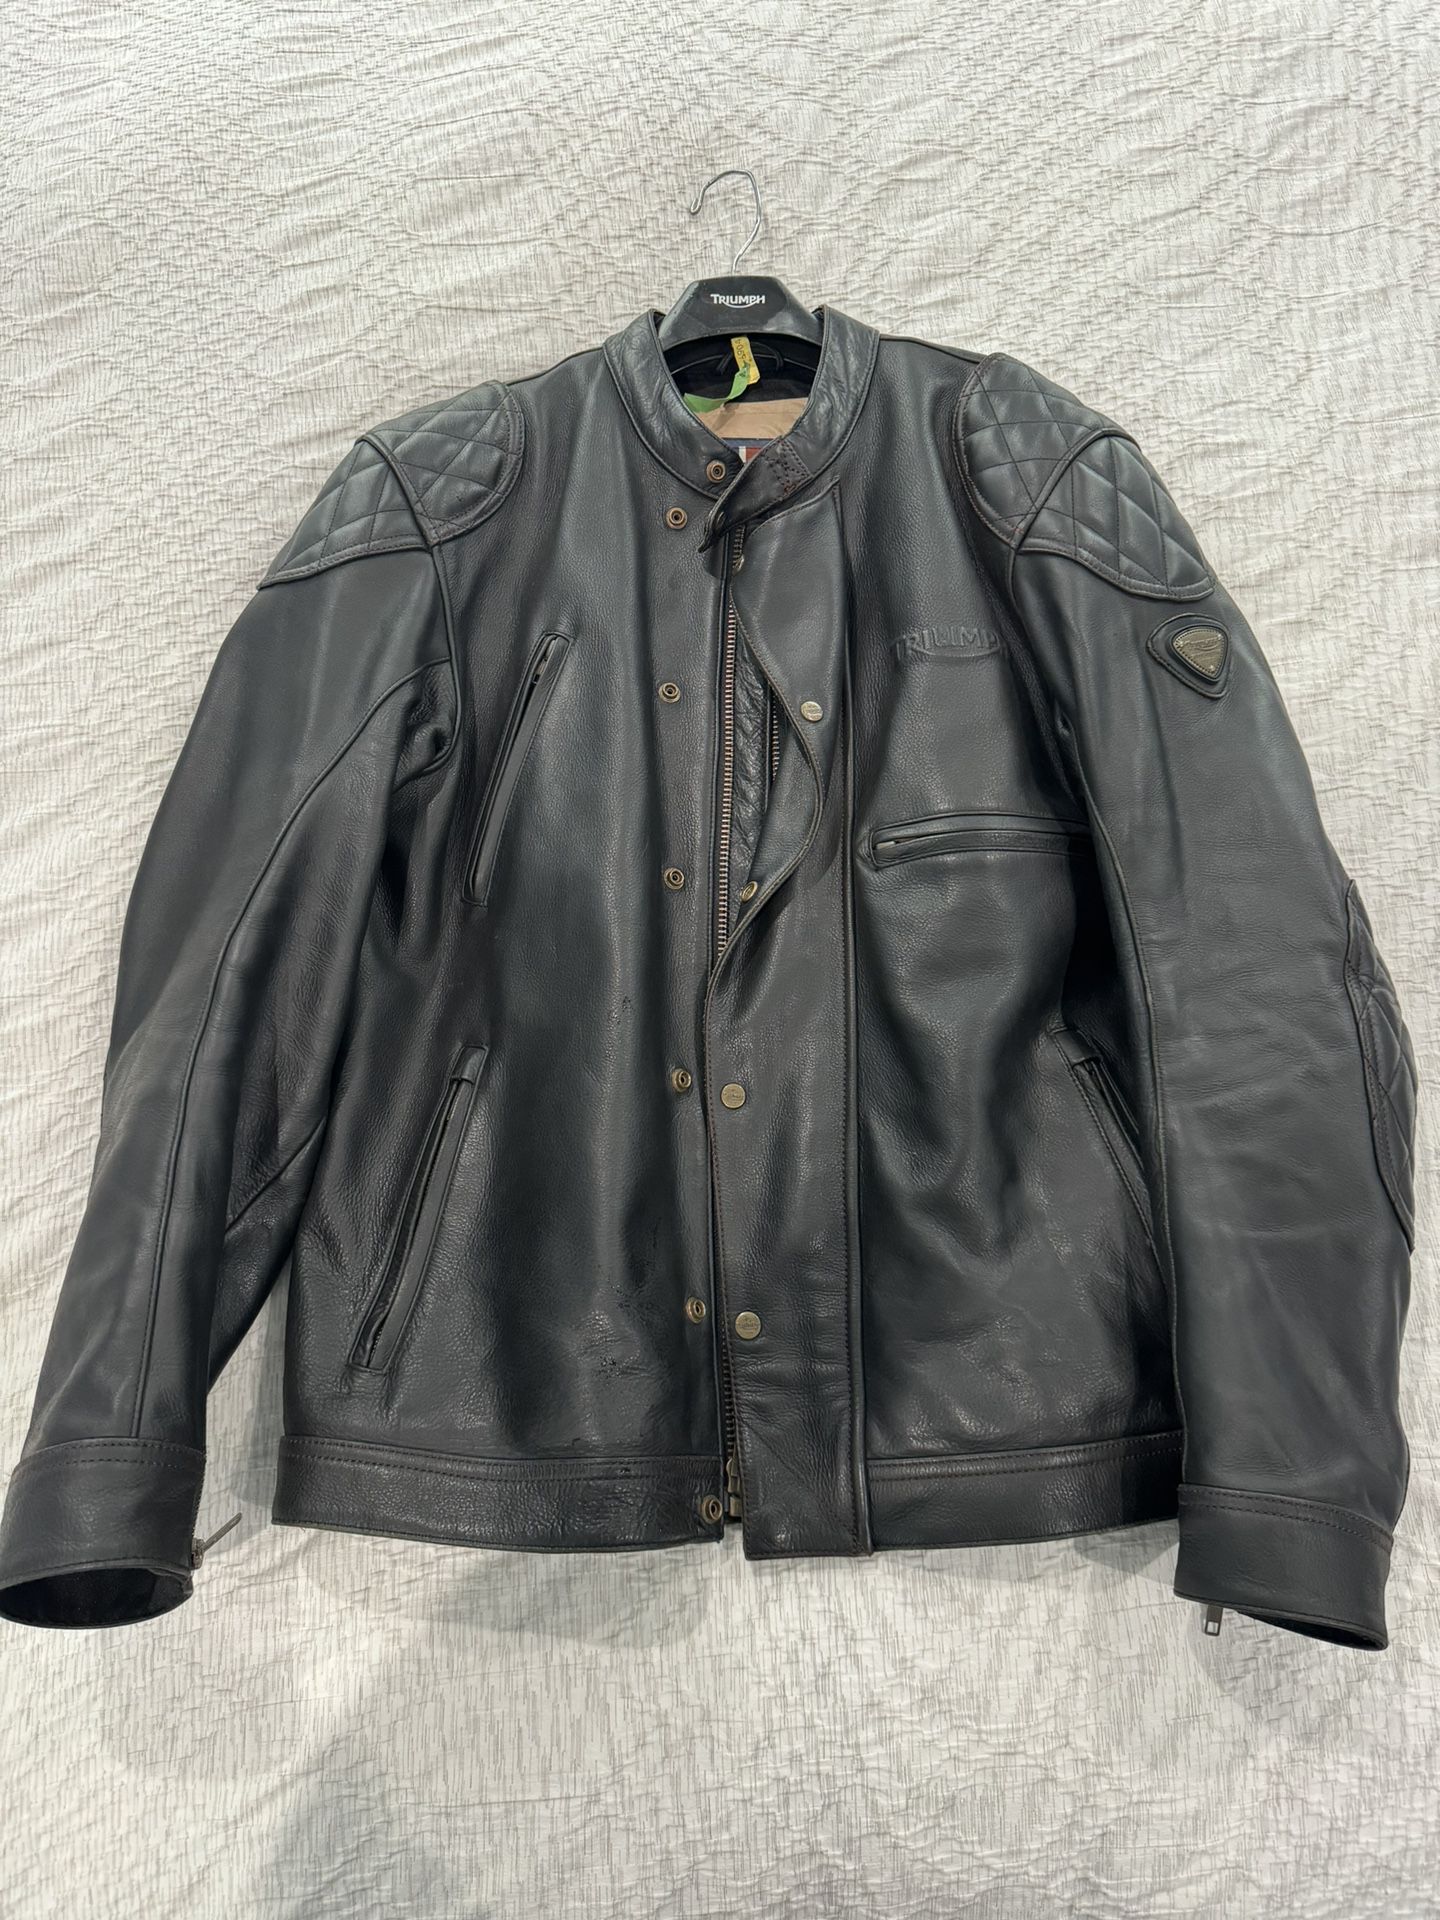 Steve McQueen Triumph Leather Jacket XL